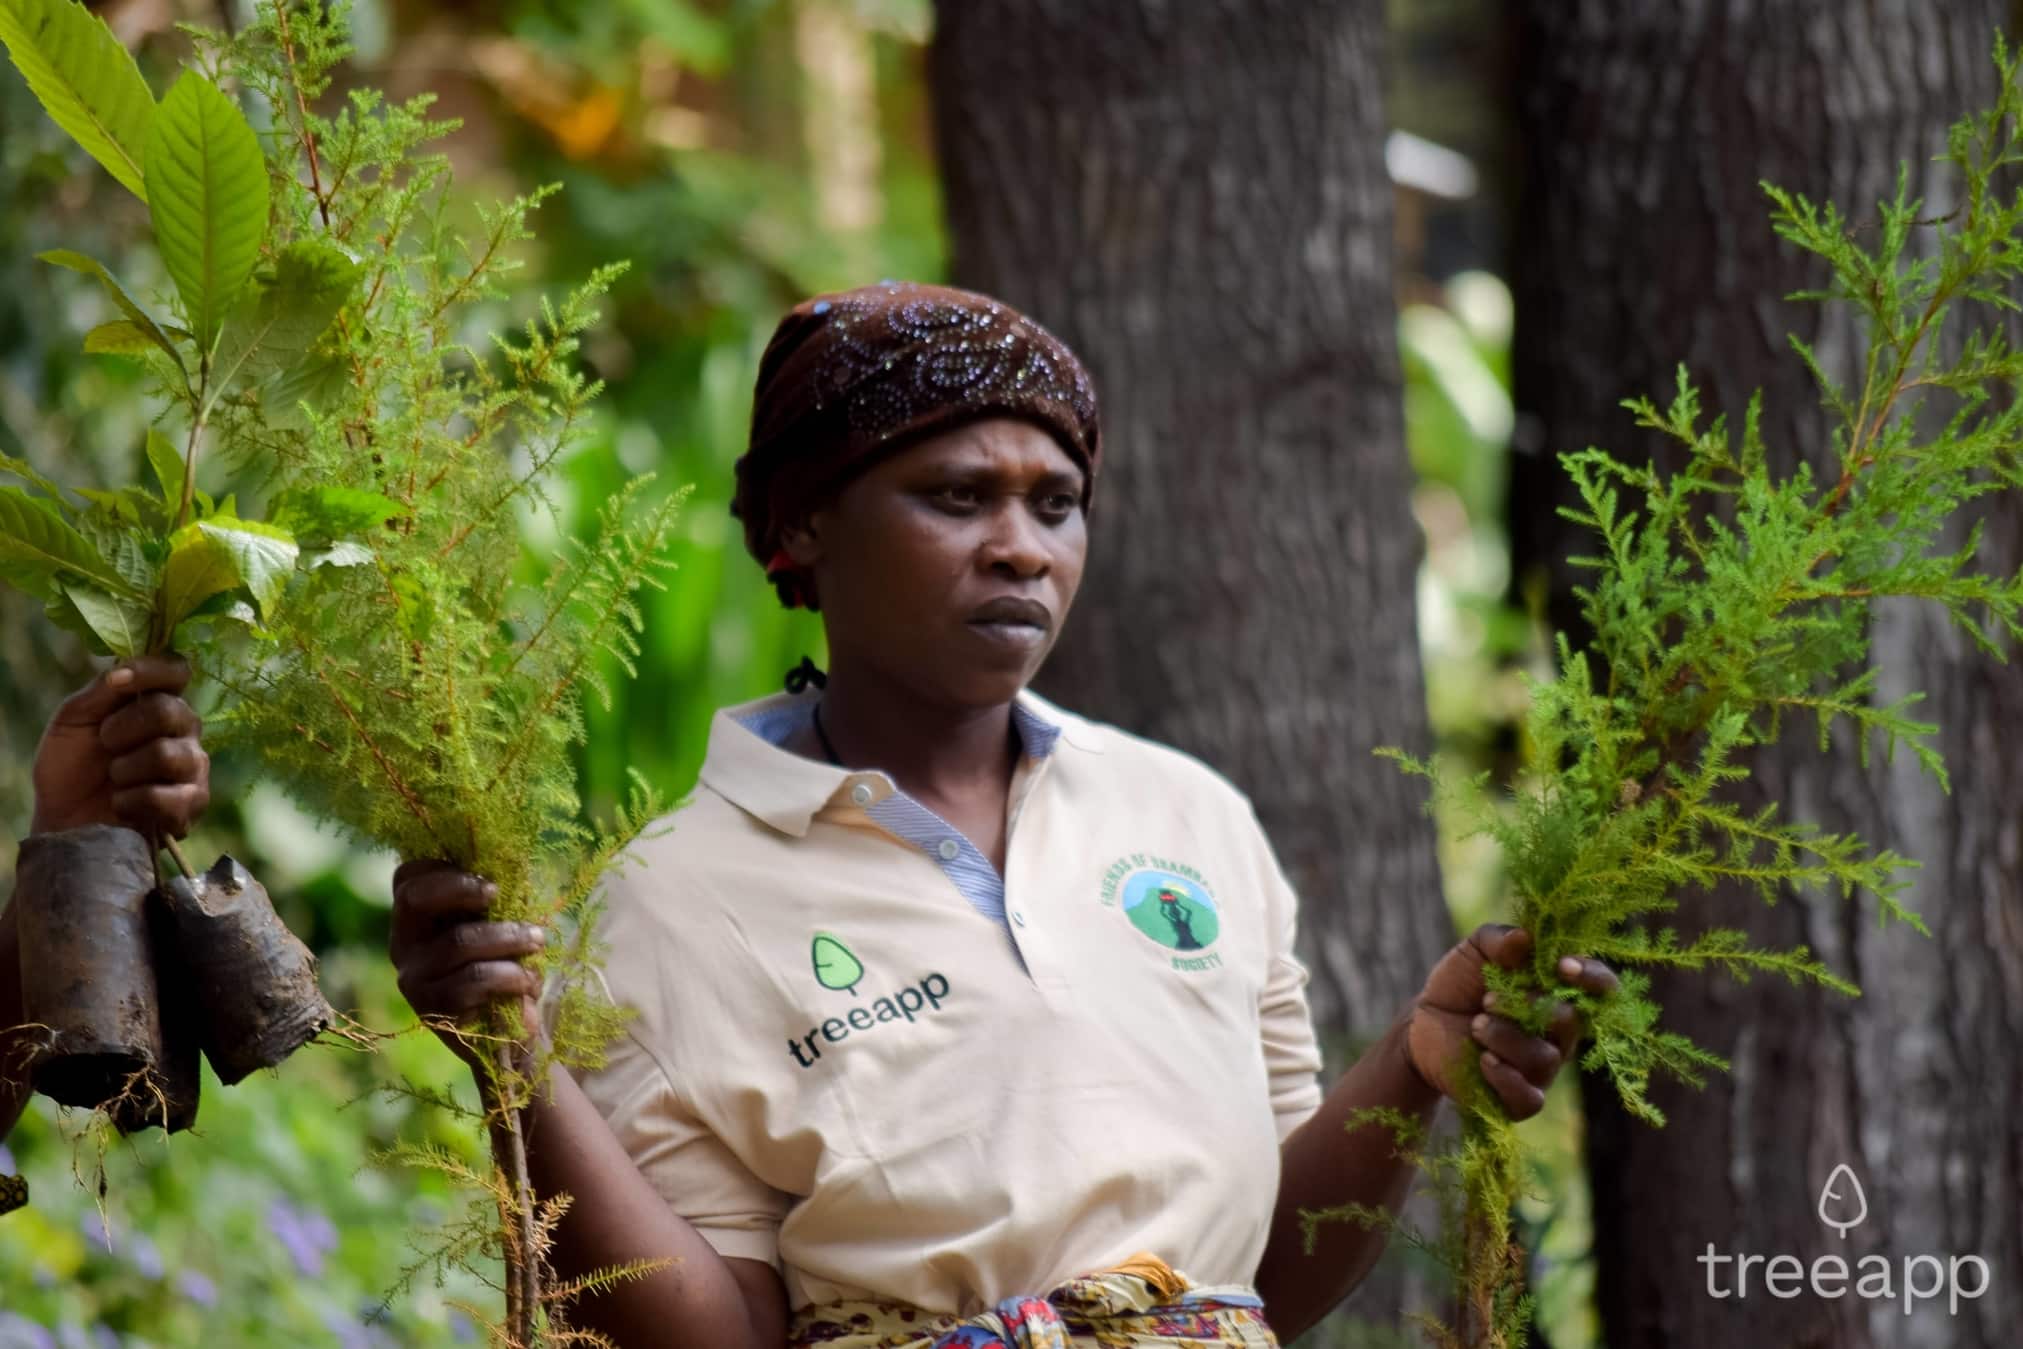 Treeapp’s planters in Tanzania planting seedlings